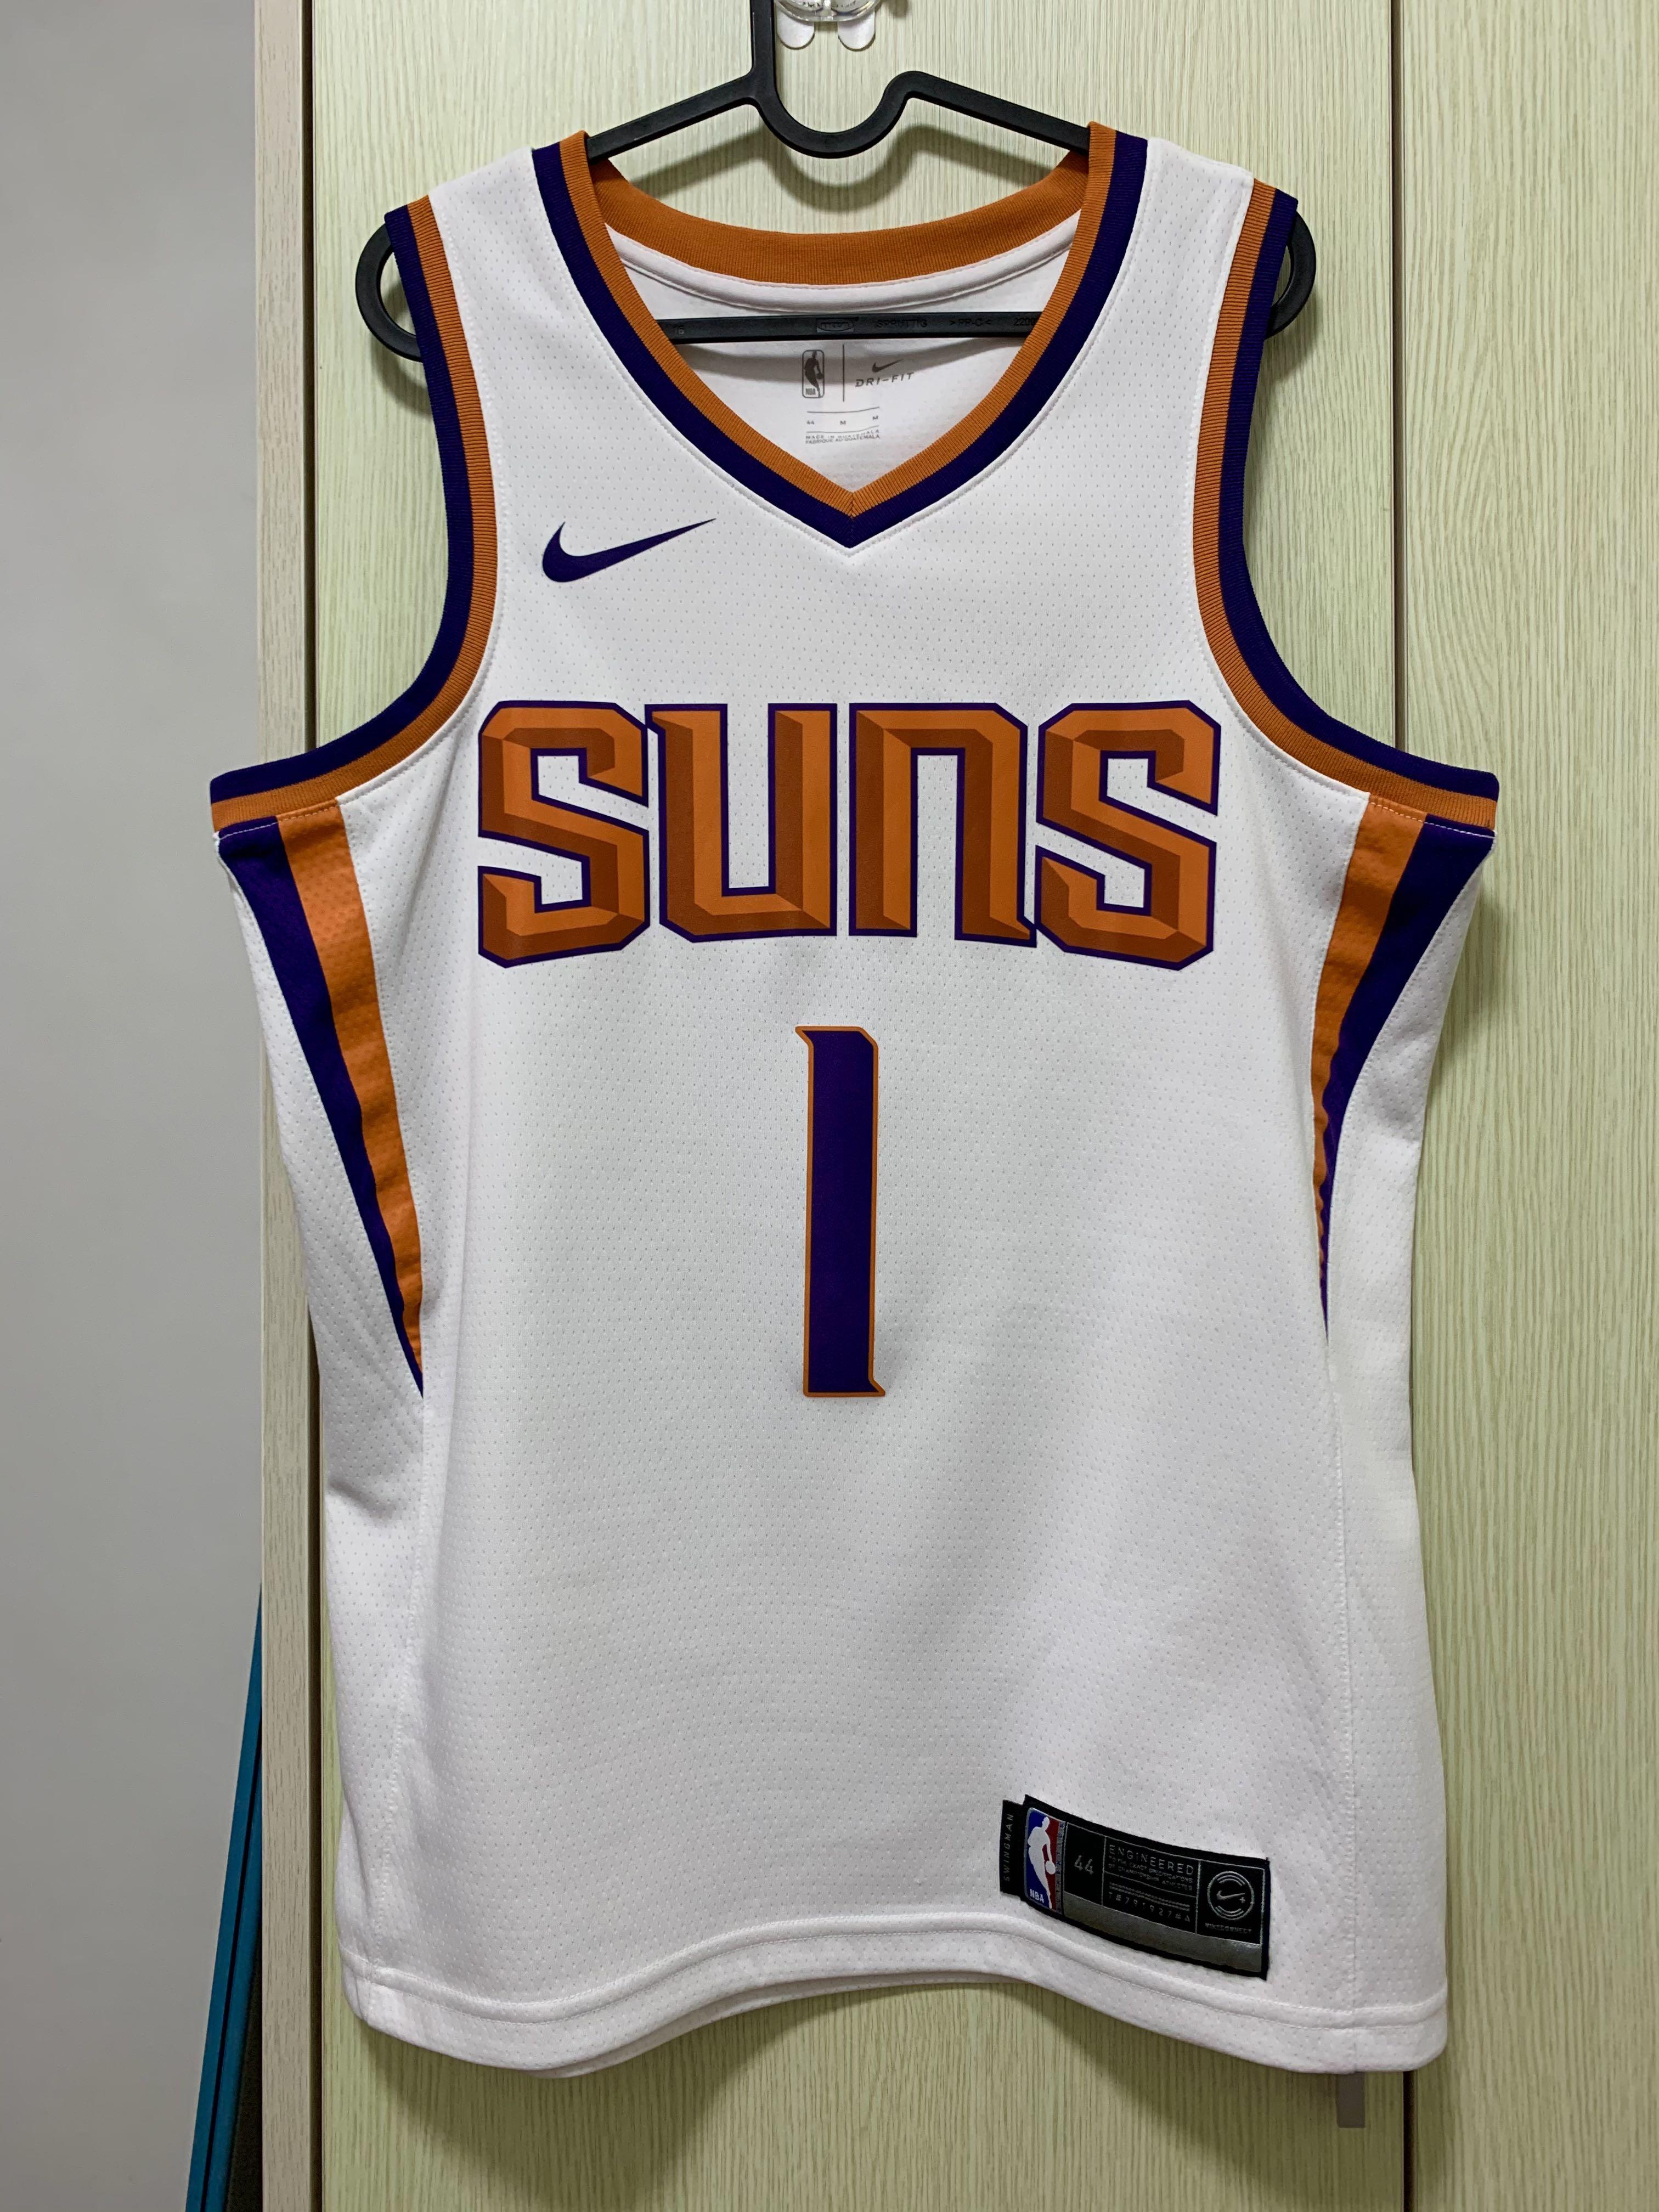 Nike Authentic Phoenix Suns 2021-2022 Statement Edition Jersey Sz 44 BNWT